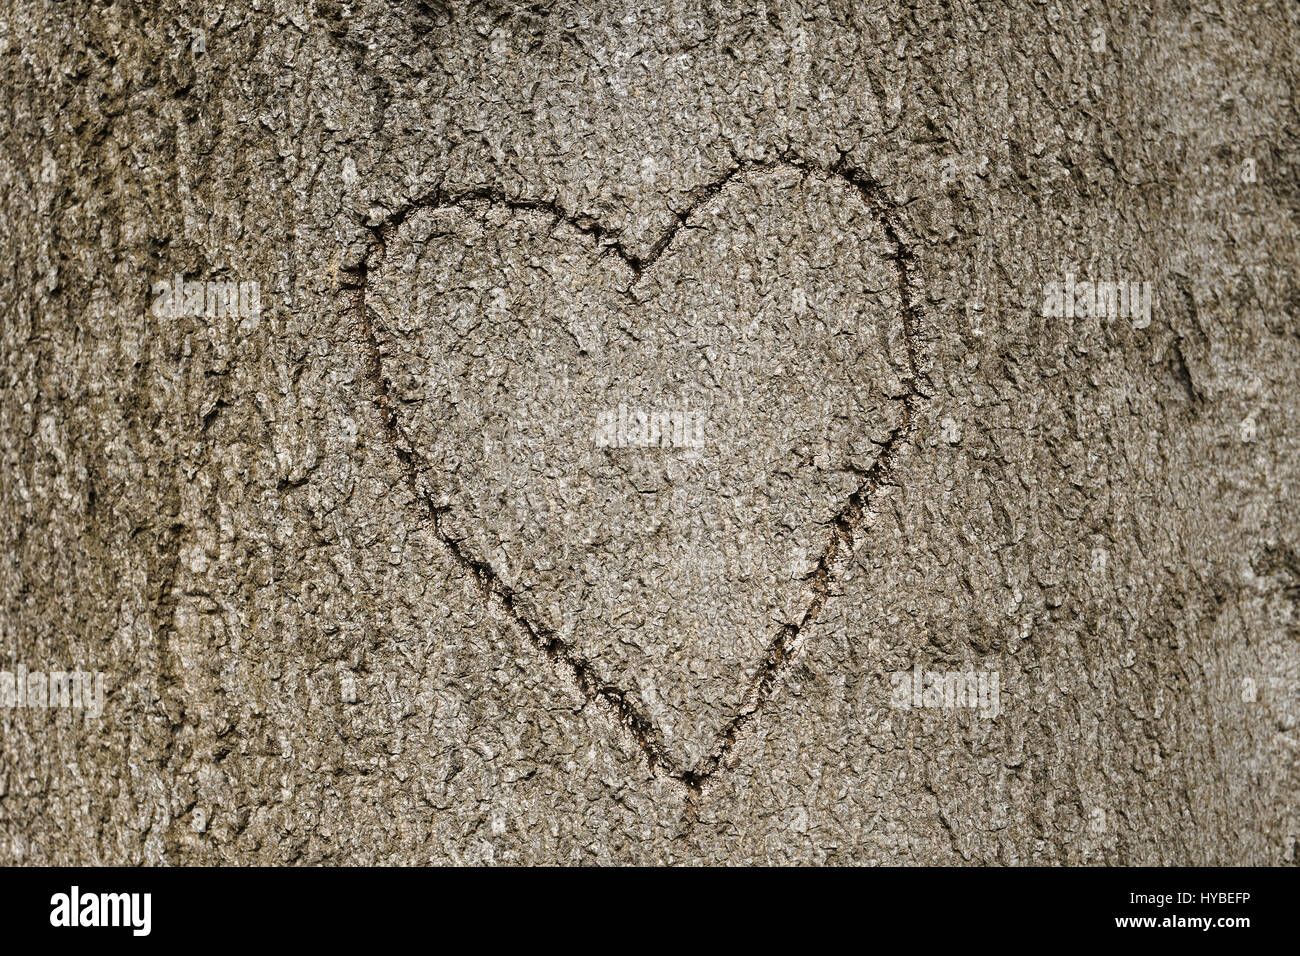 heart shape carved into tree Stock Photo